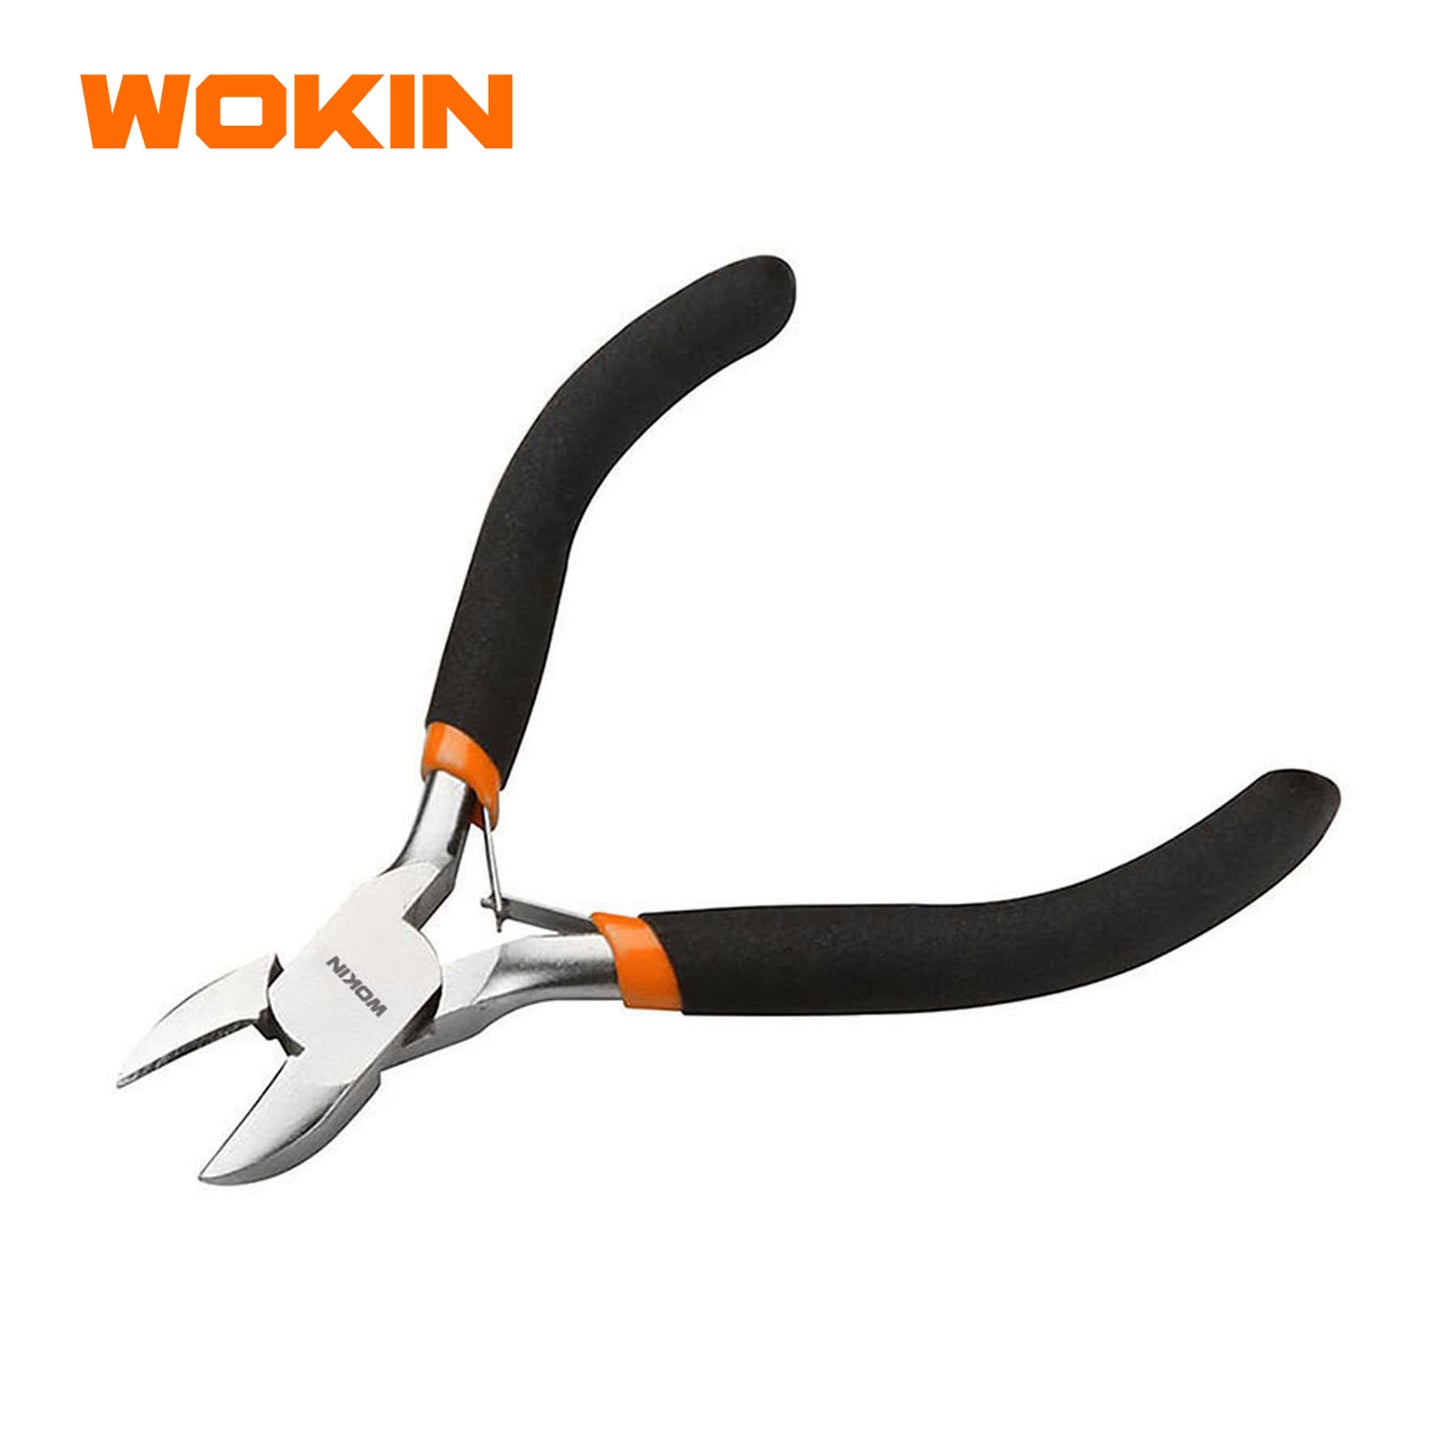 Wokin 4.5 Inch Mini Diagonal Cutting Pliers